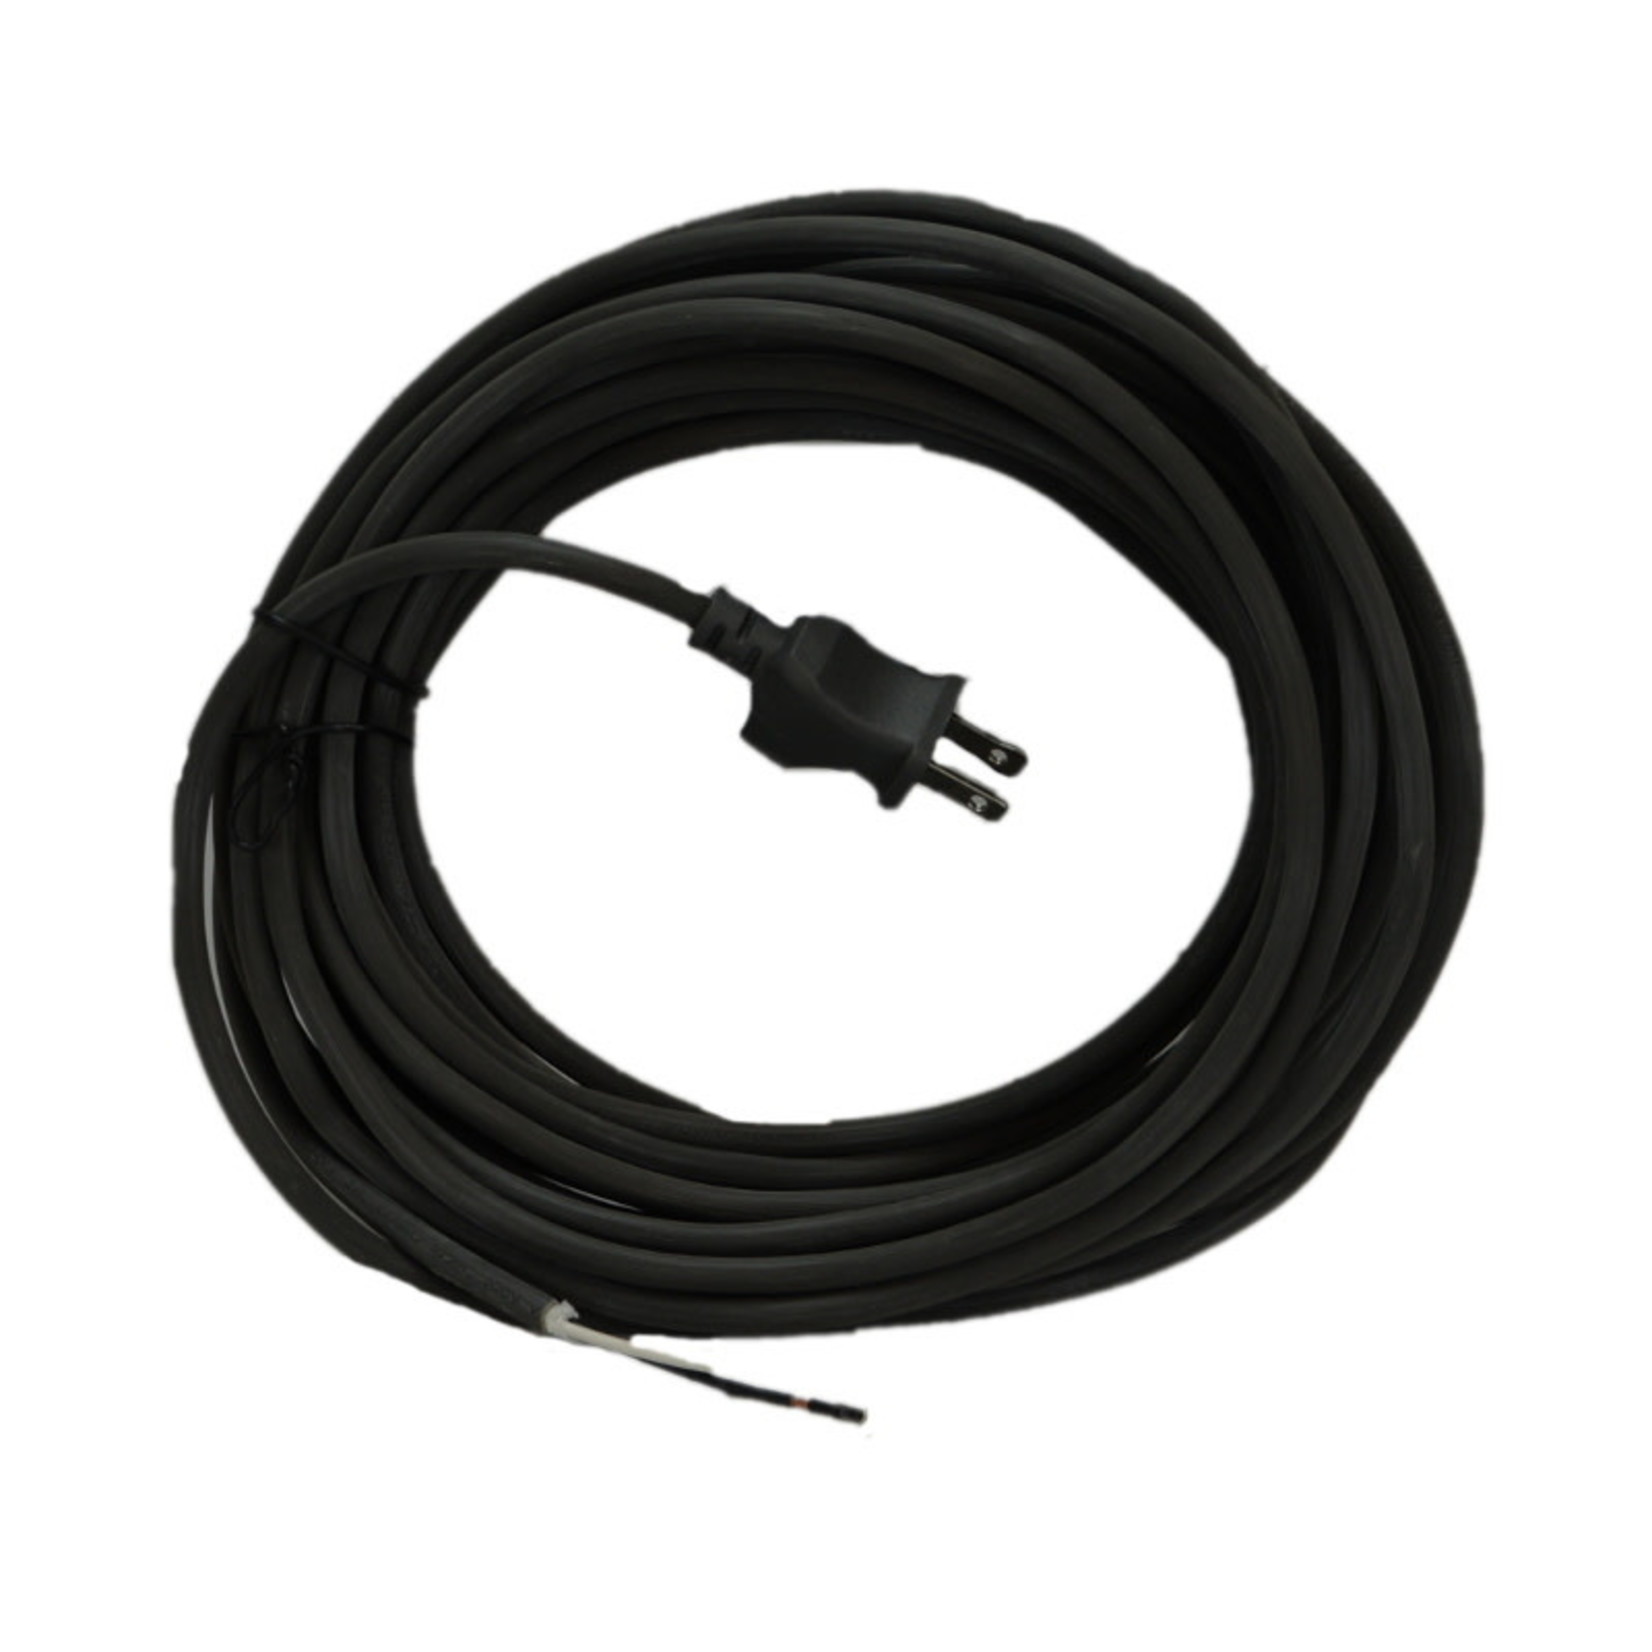 Electrolux Generic Vacuum 30' 2-Wire Cord - 18 Gauge - Black